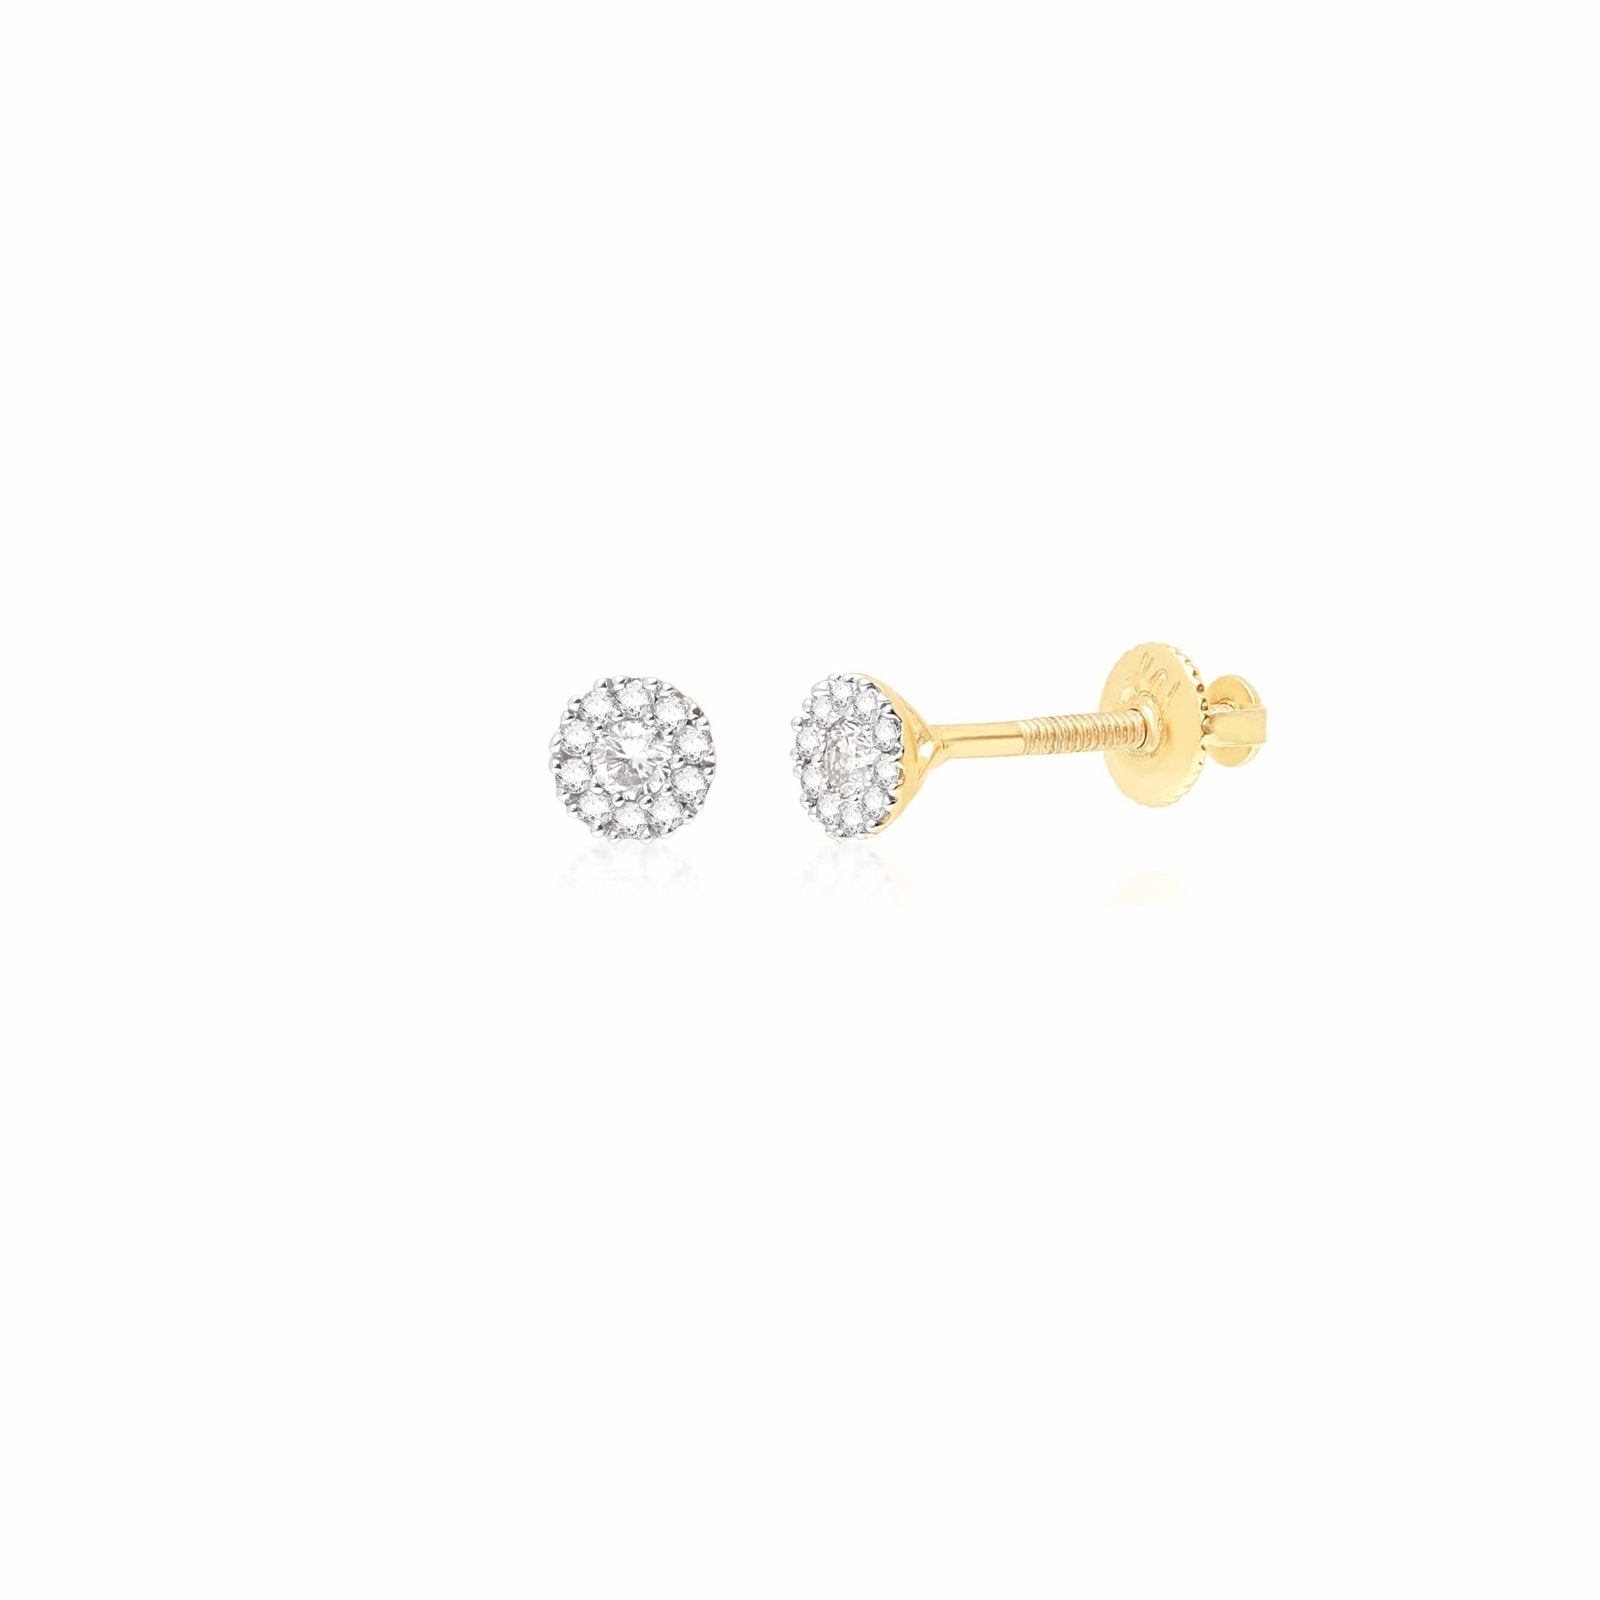 Round Diamond Pavé Screw Back Earrings Earrings Estella Collection #product_description# 14k Diamond Earrings #tag4# #tag5# #tag6# #tag7# #tag8# #tag9# #tag10#